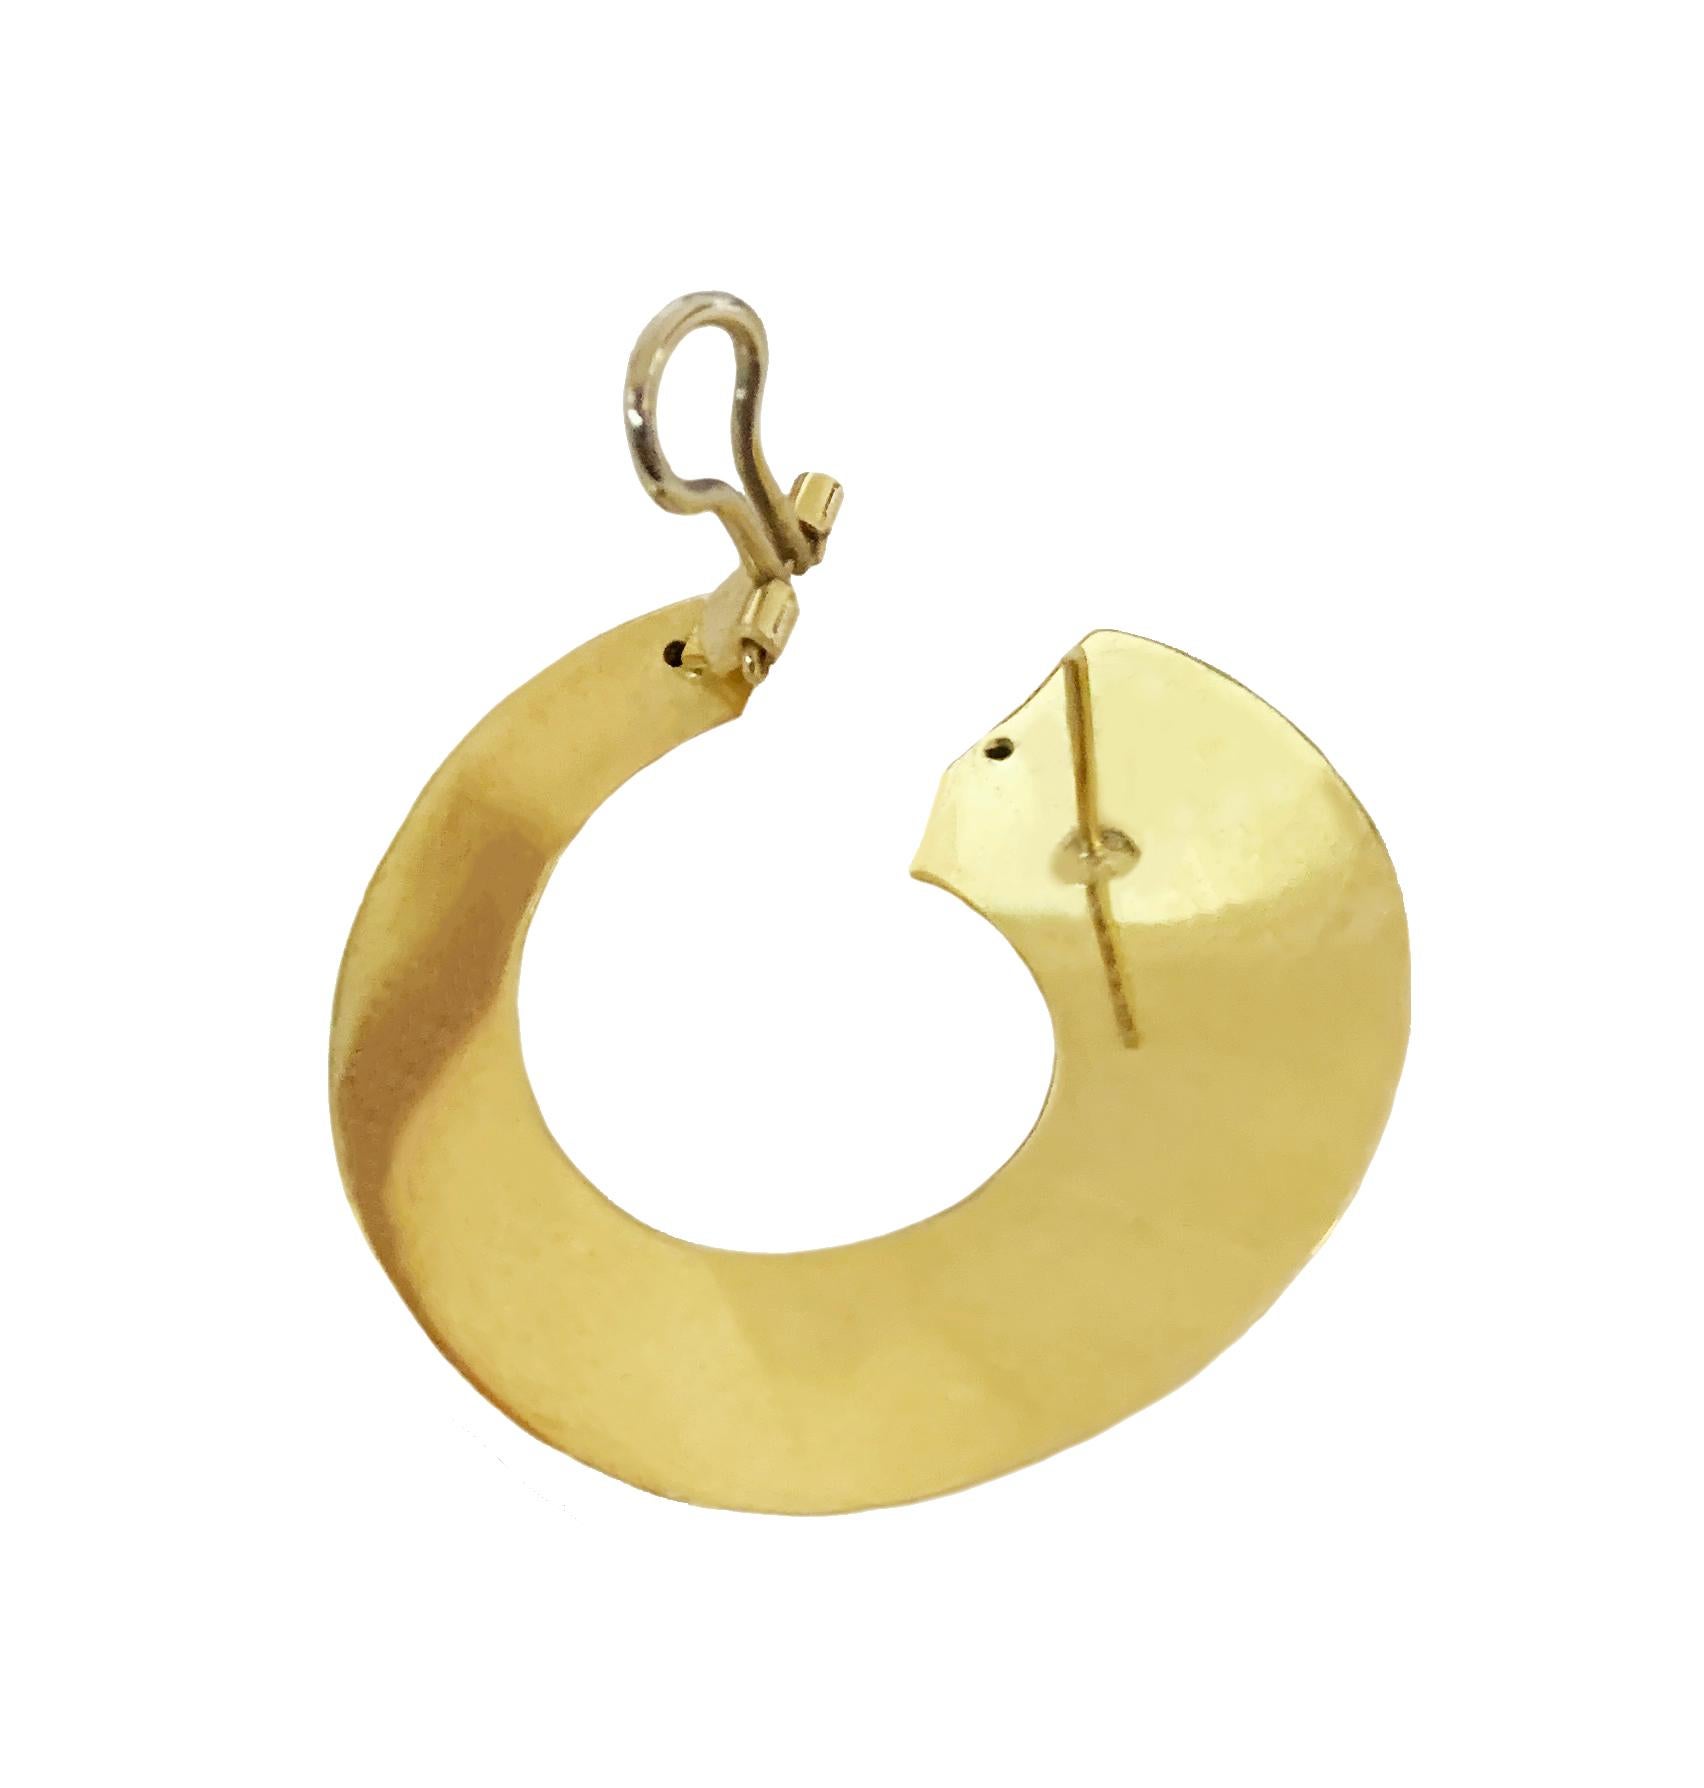 14k Yellow Gold
Diameter: 1.4”
Weight: 11.2gr
For pierced ears